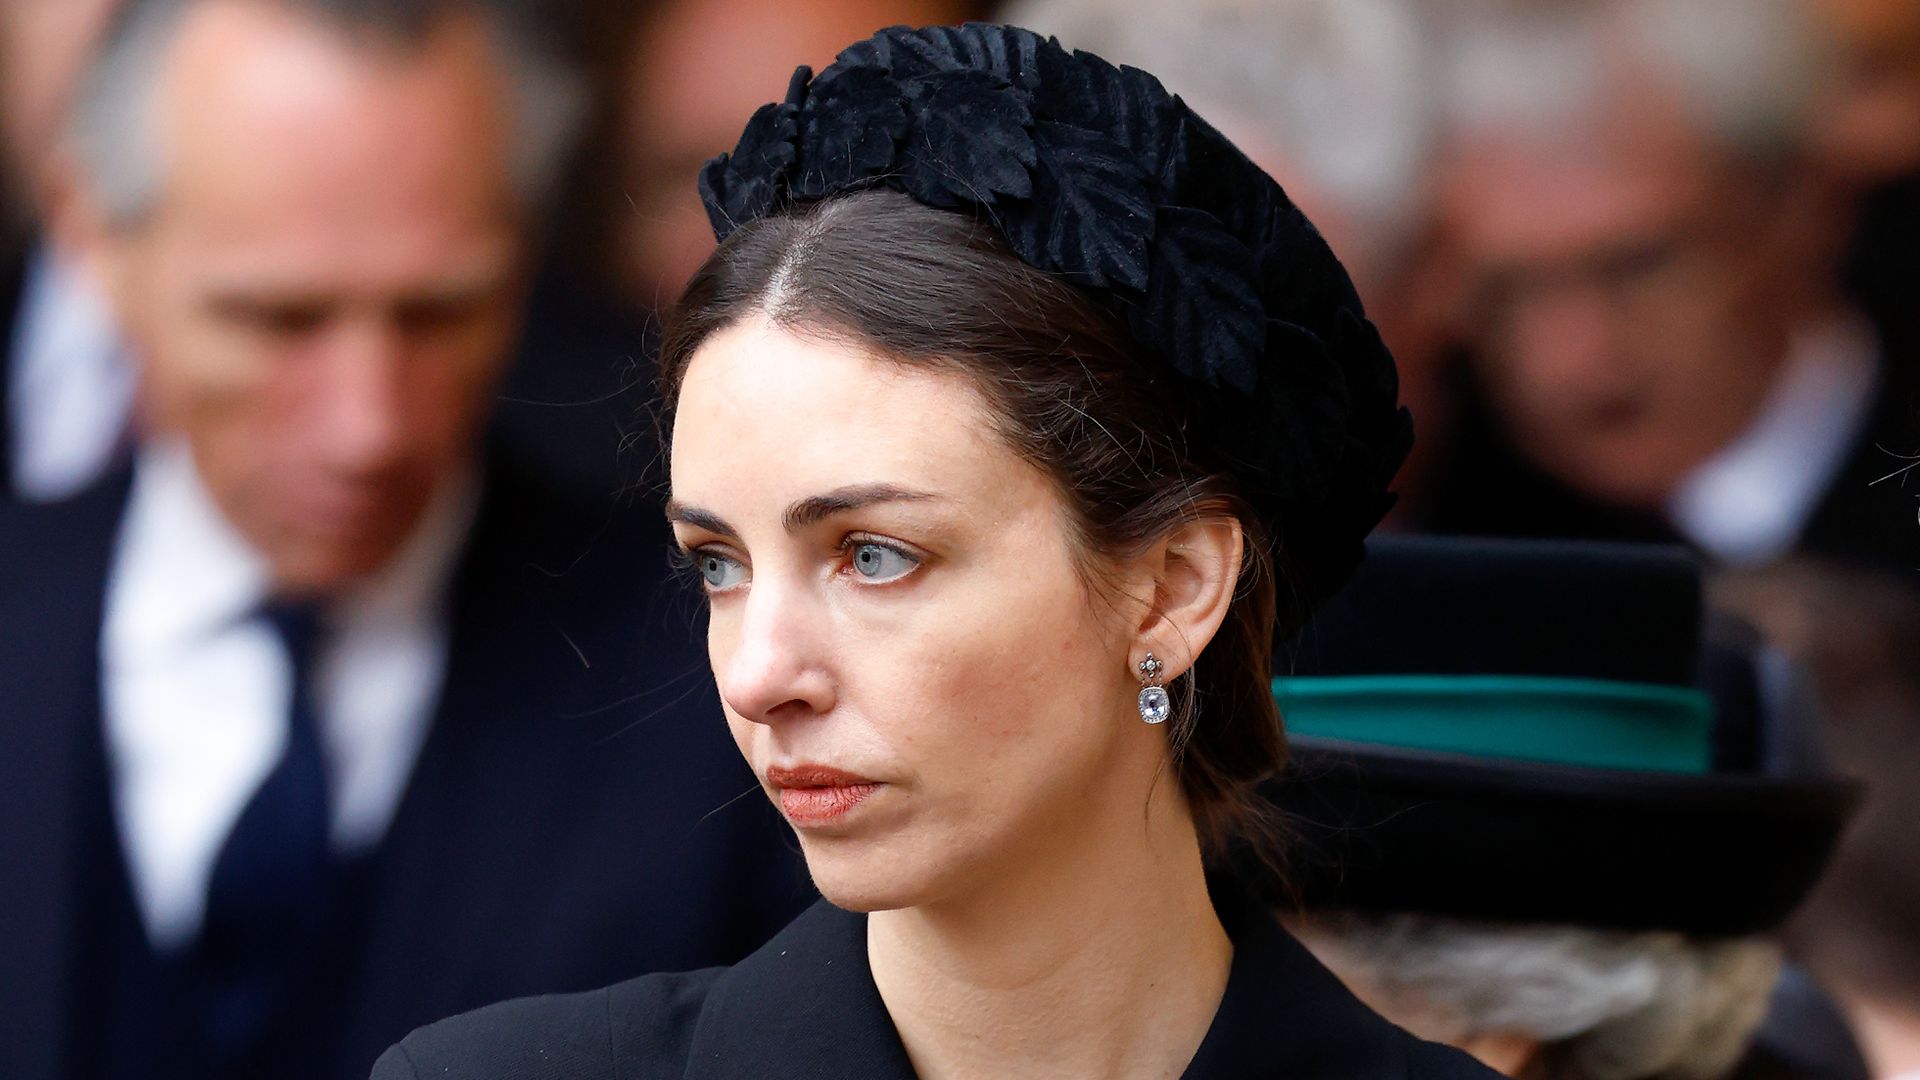 Rose Hanbury breaks silence on Prince William affair rumours amid Princess Kate speculation